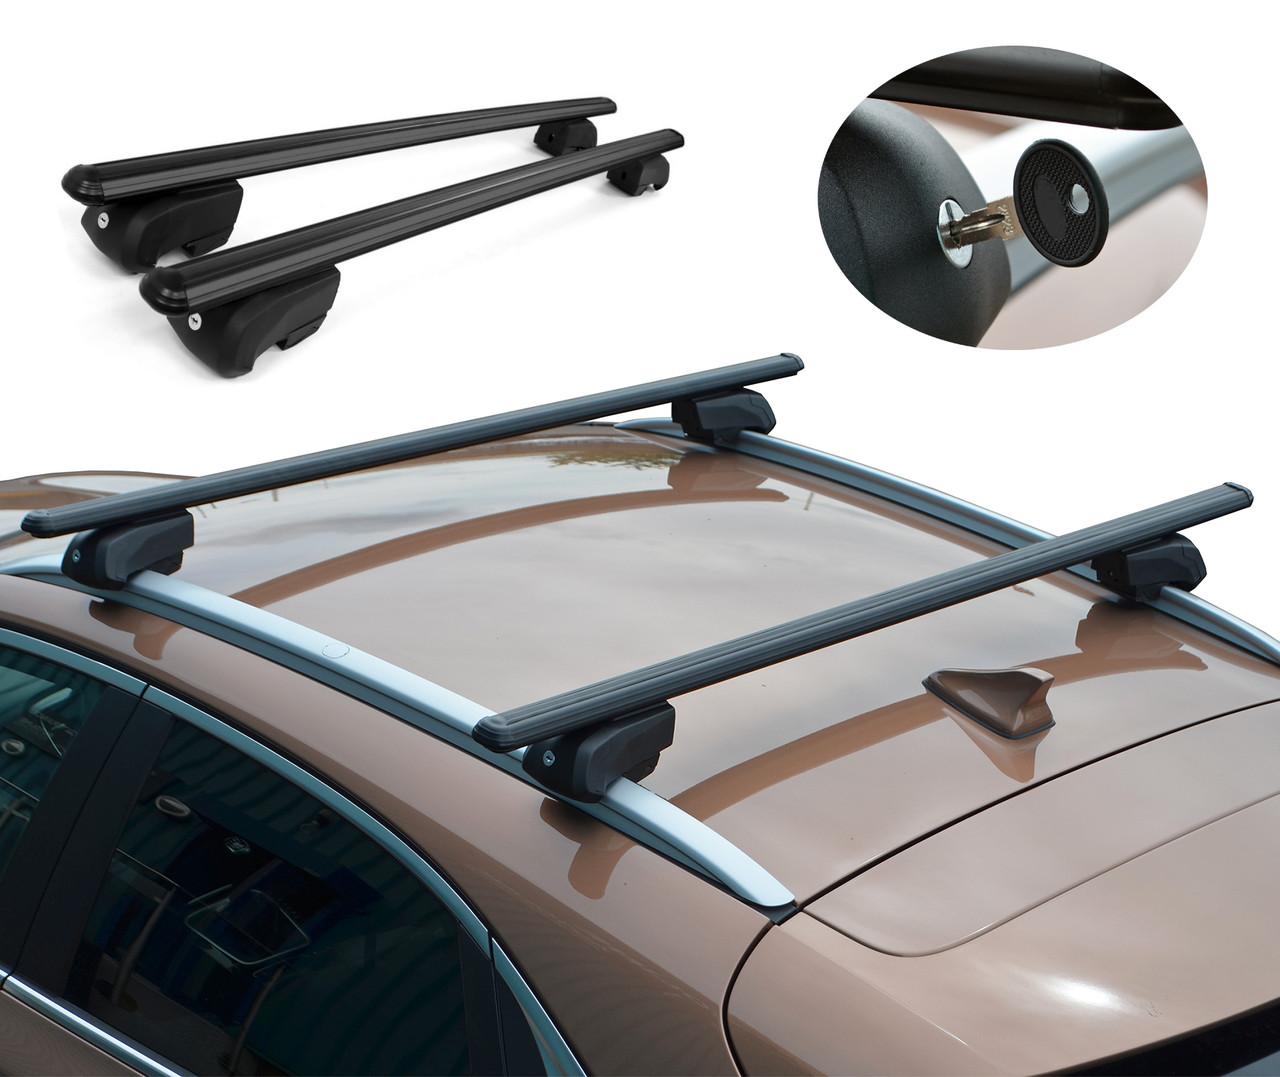 Black Cross Bars For Roof Rails To Fit Audi A4 Avant (B8 2008-15) 75KG Lockable